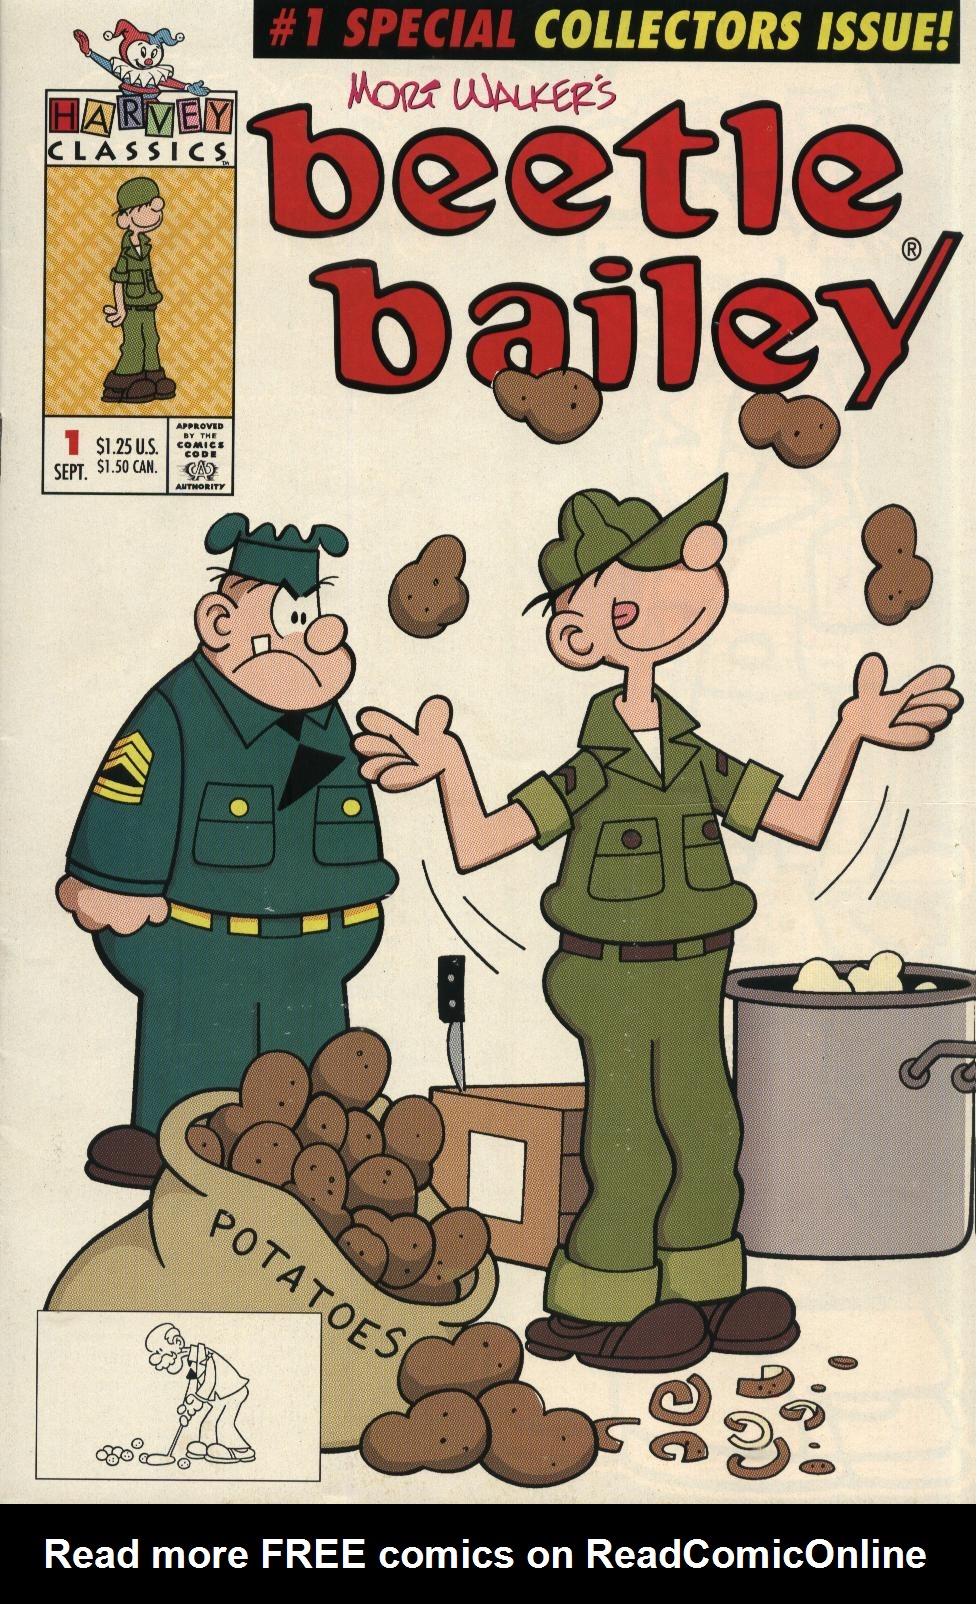 Beetle Bailey Cartoon Xxx Porn - Beetle Bailey Issue 1 | Read Beetle Bailey Issue 1 comic online in high  quality. Read Full Comic online for free - Read comics online in high  quality .|viewcomiconline.com